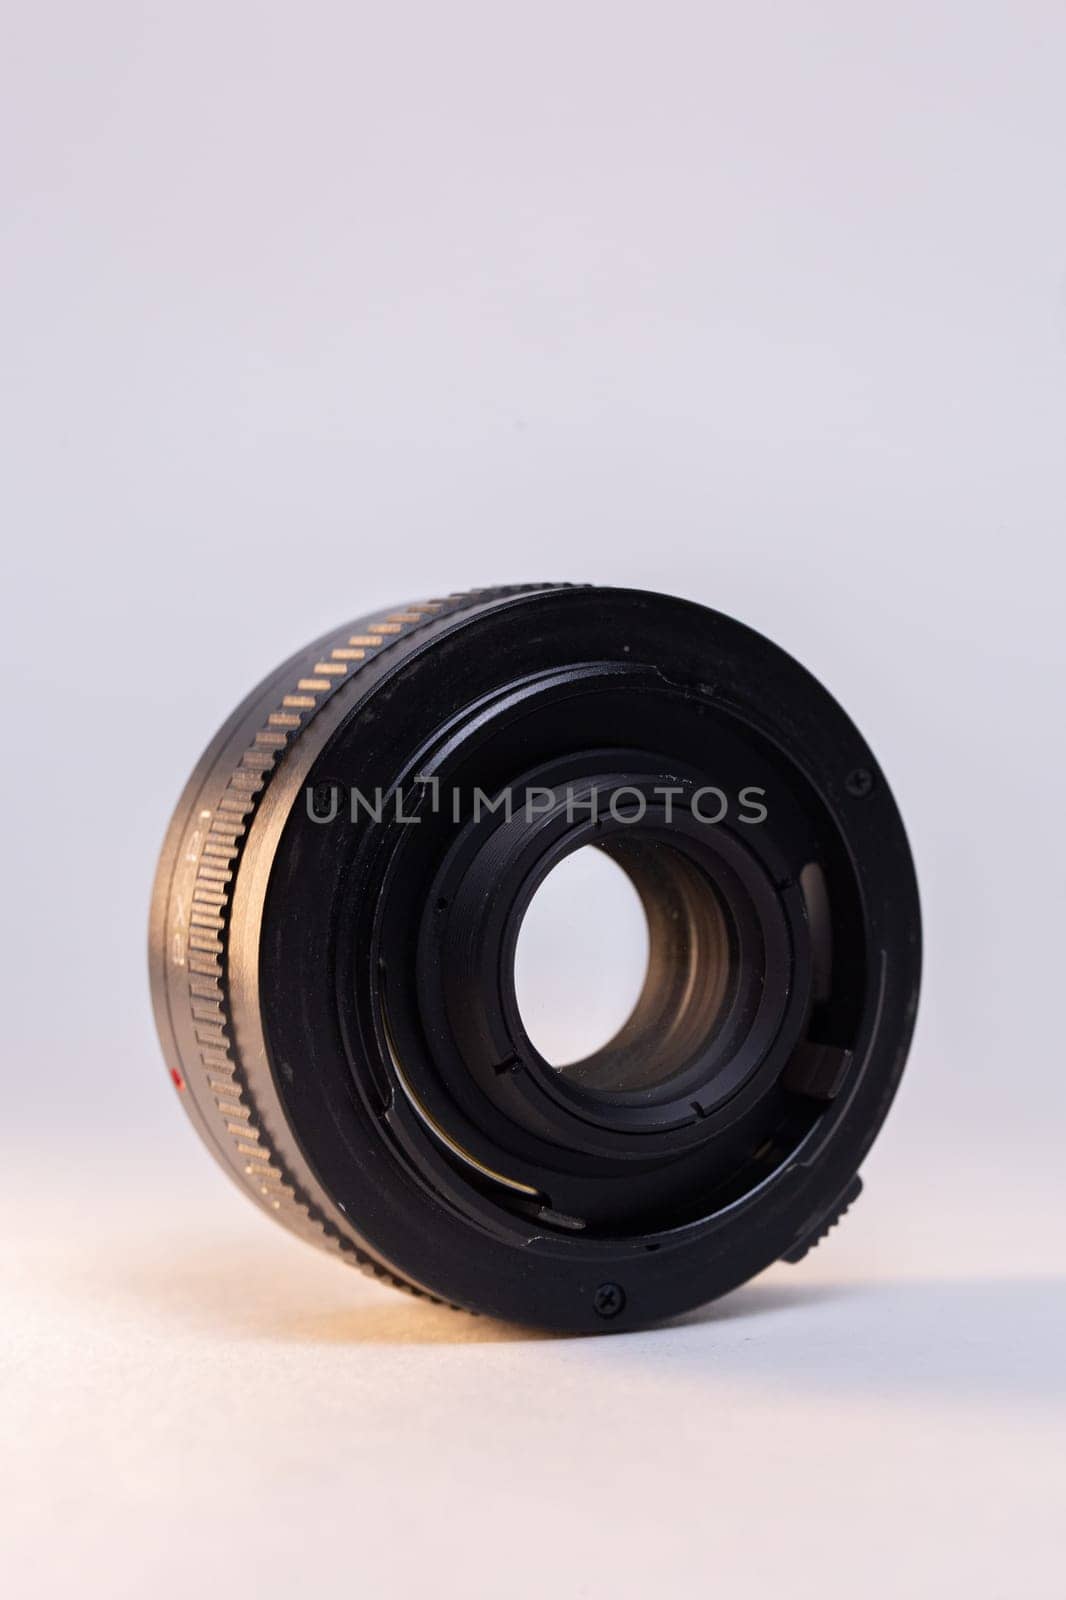 Black camera telephoto lens converter on white background by Pukhovskiy